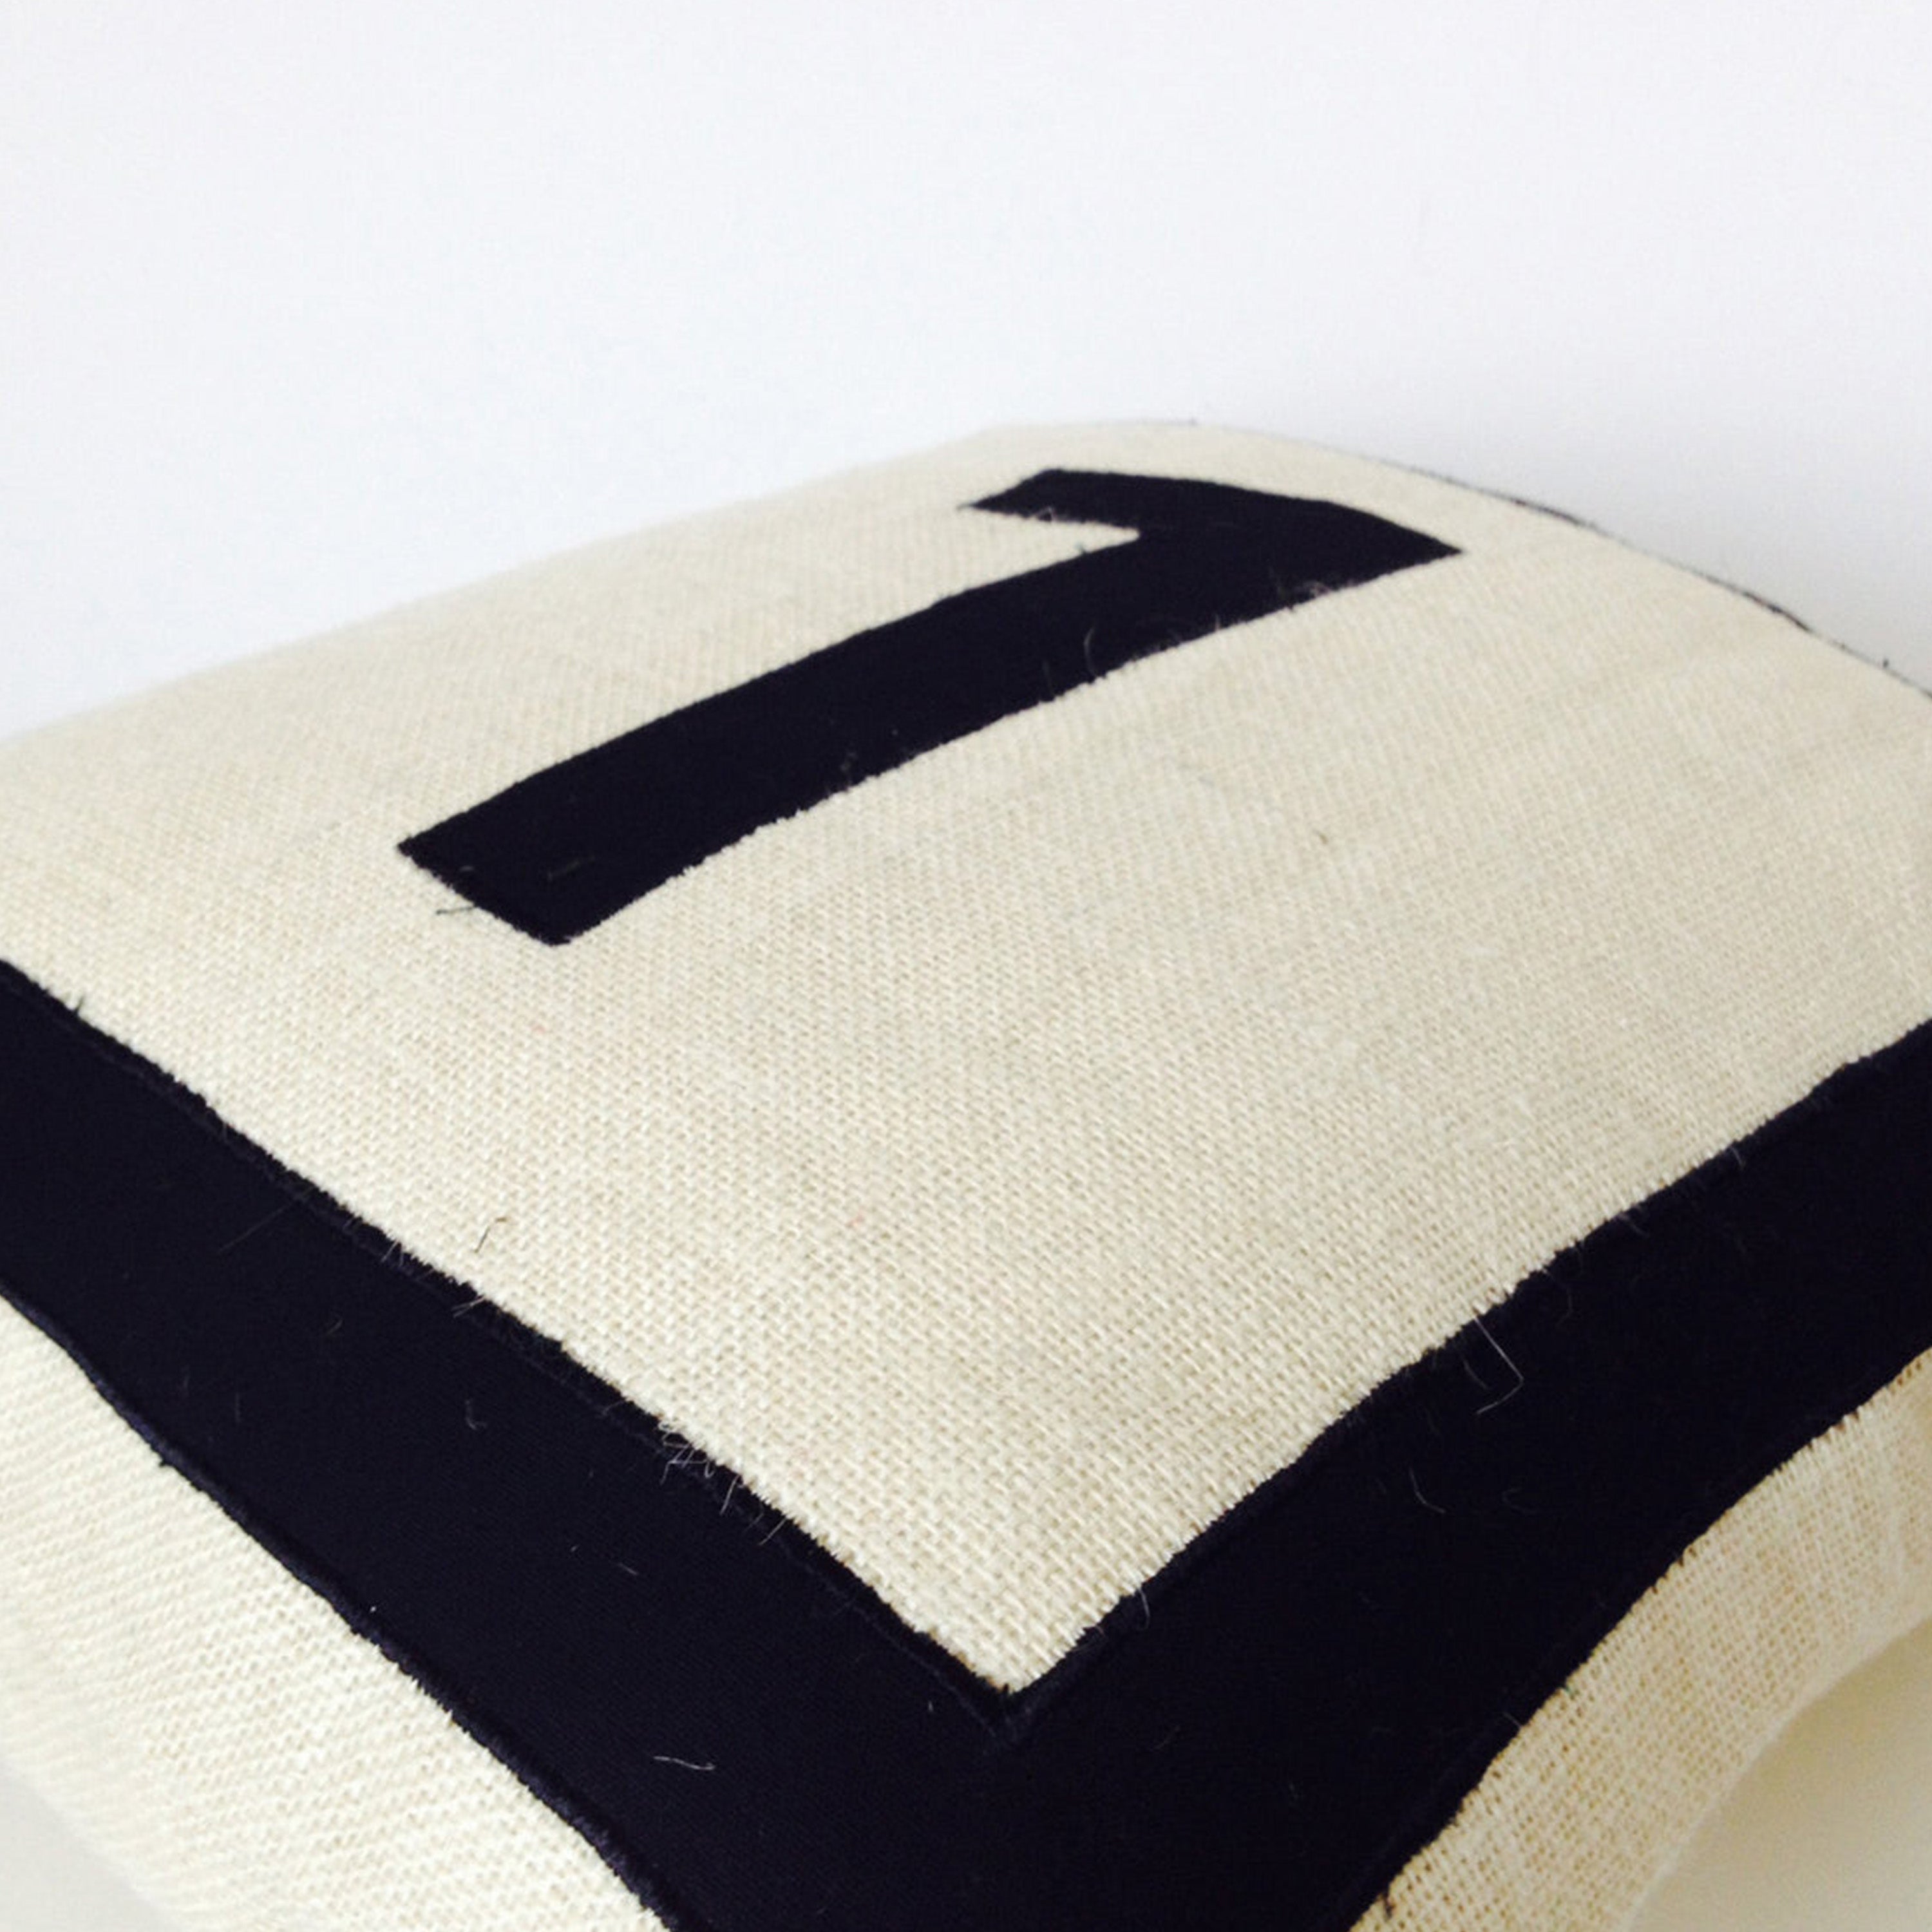 Personalized Monogram throw pillow- Burlap pillows- Black monogram cushion -applique -initial pillow -Decorative pillow covers- 16x16 pillow